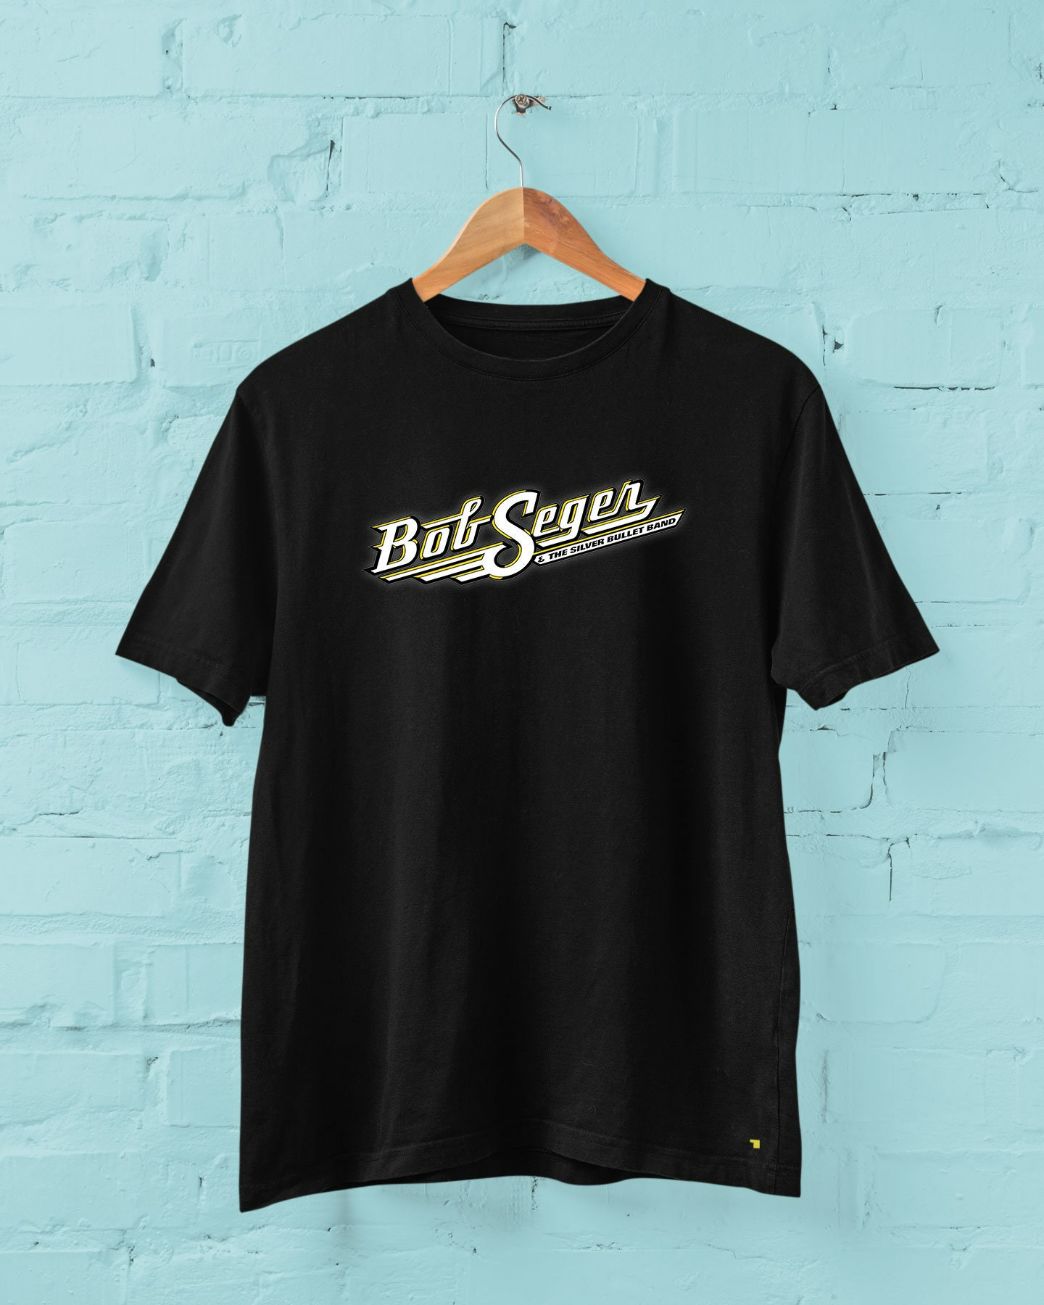 Bob Seger and Silver Bullet Logo Men's Black T-Shirt Size S to 3XL *100% cotton